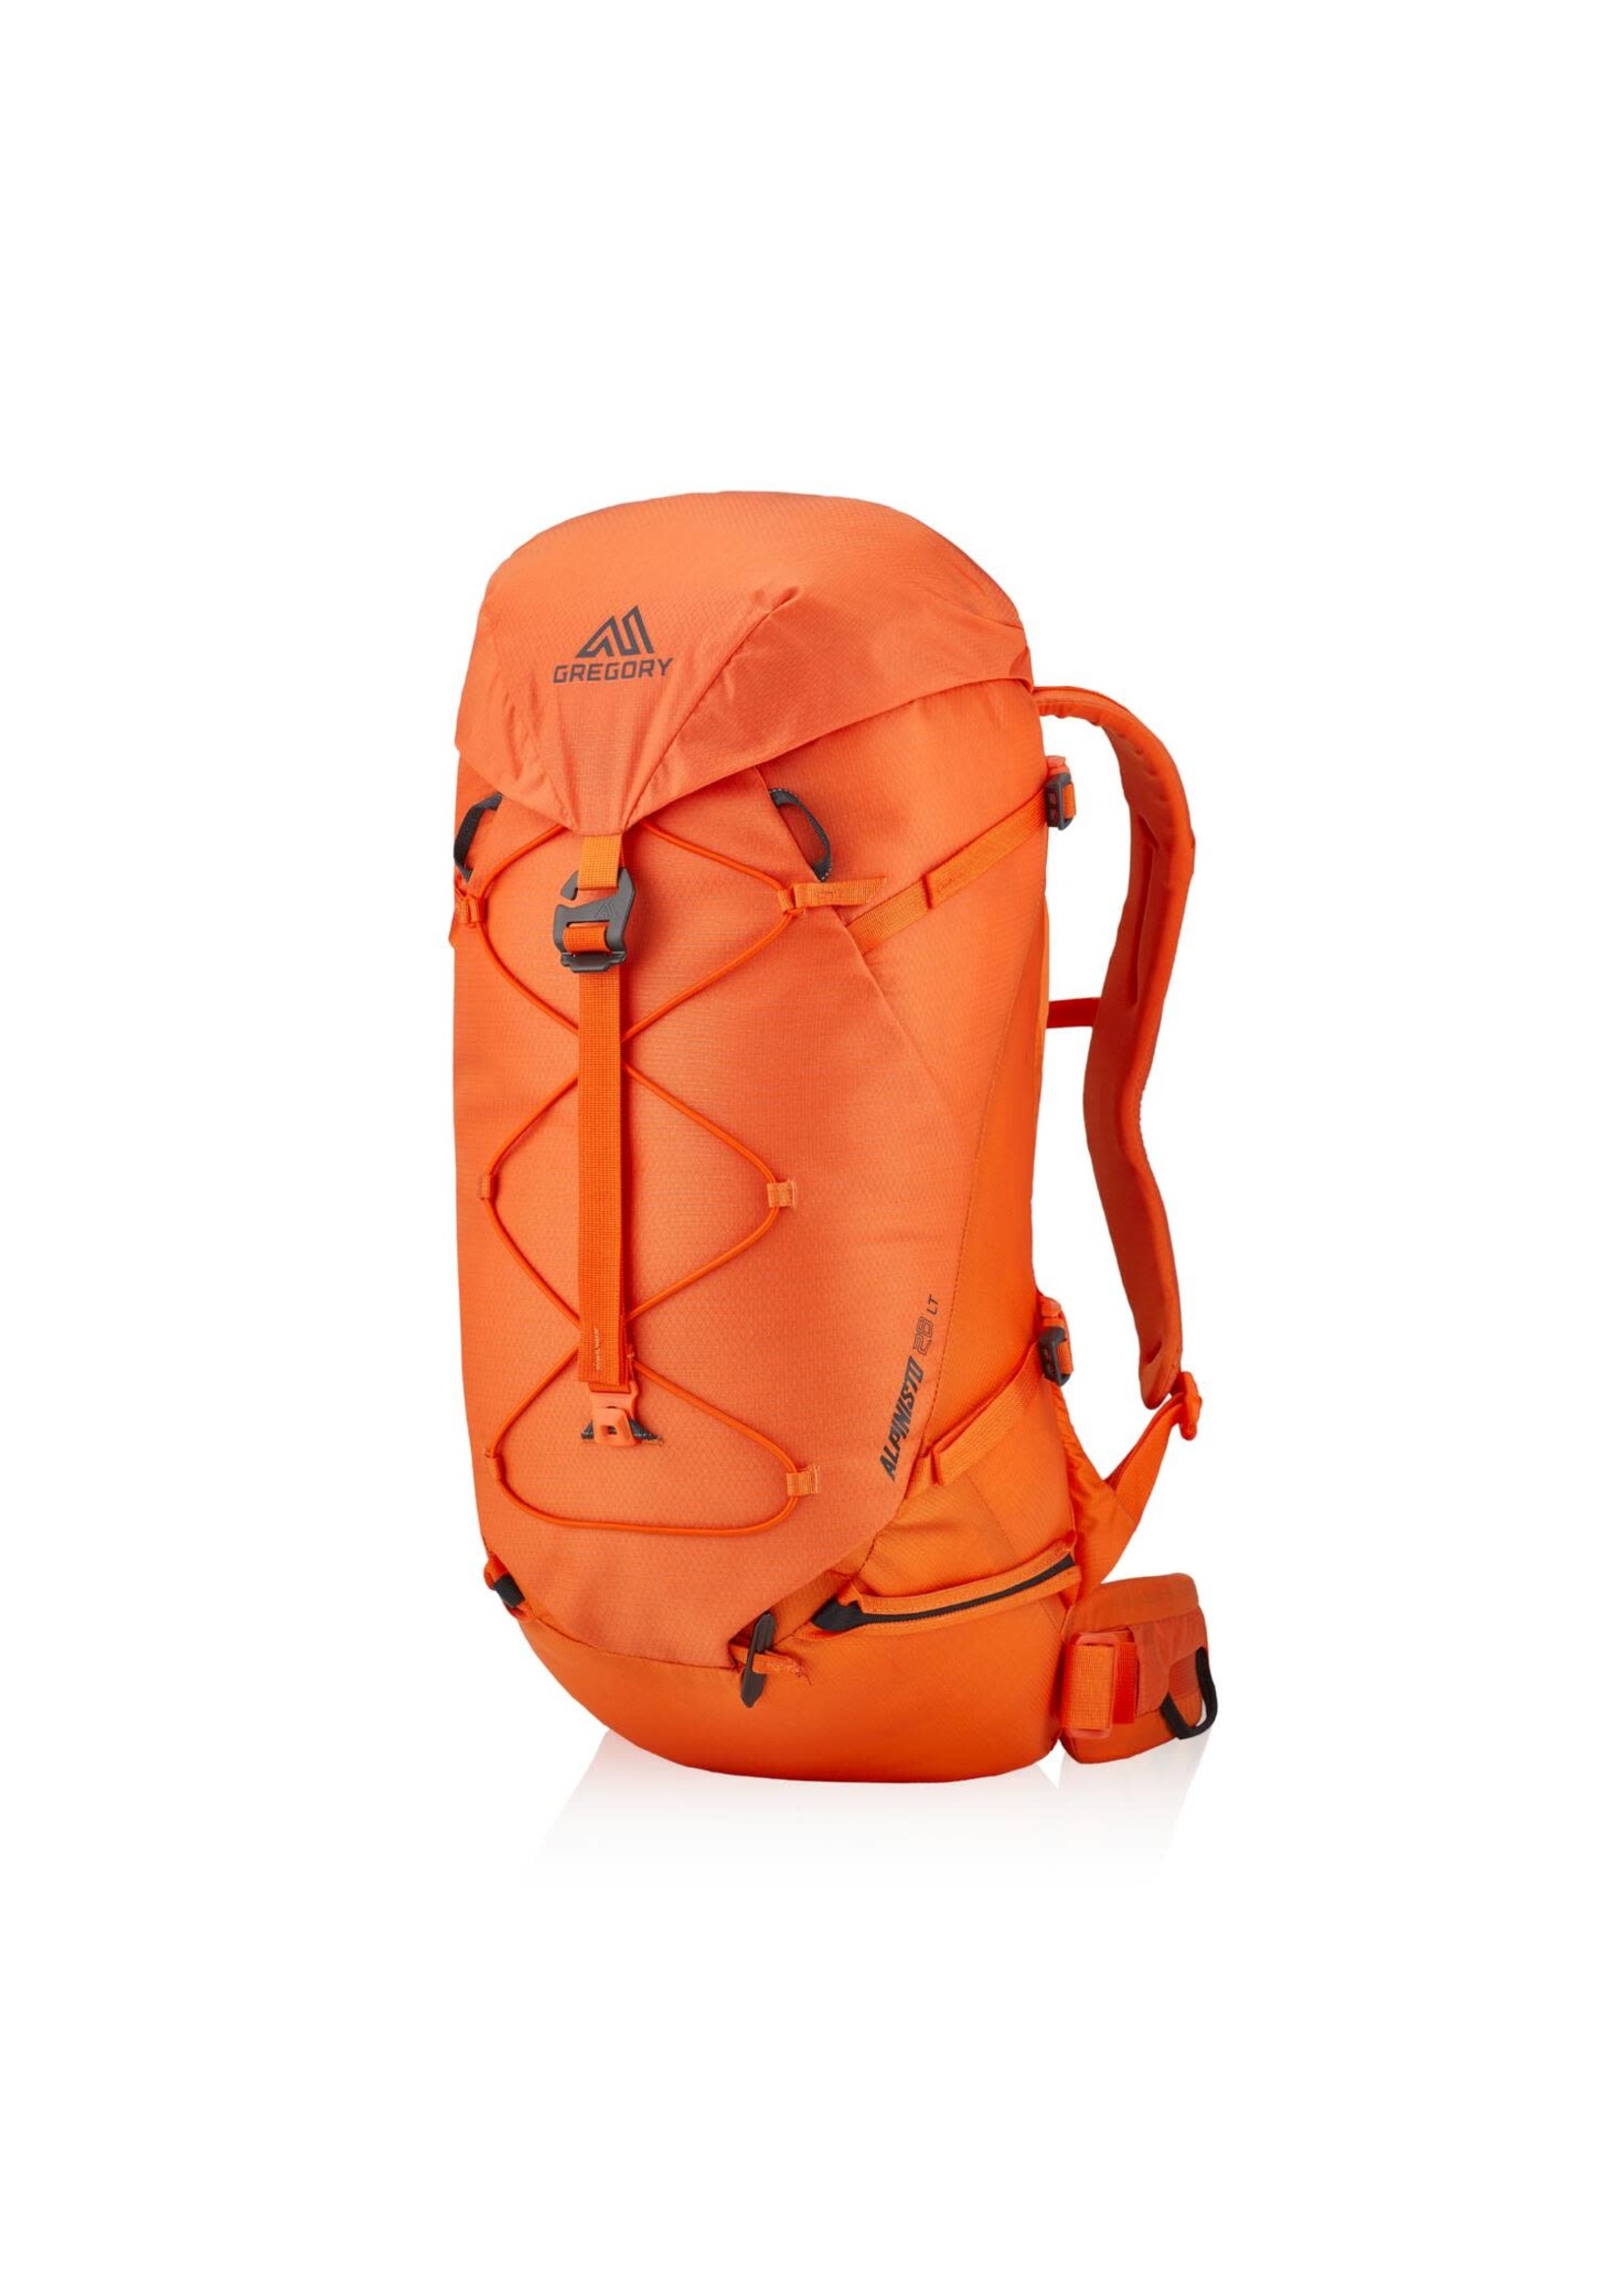 Gregory Gregory Alpinisto 28 LT Backpack - Unisex